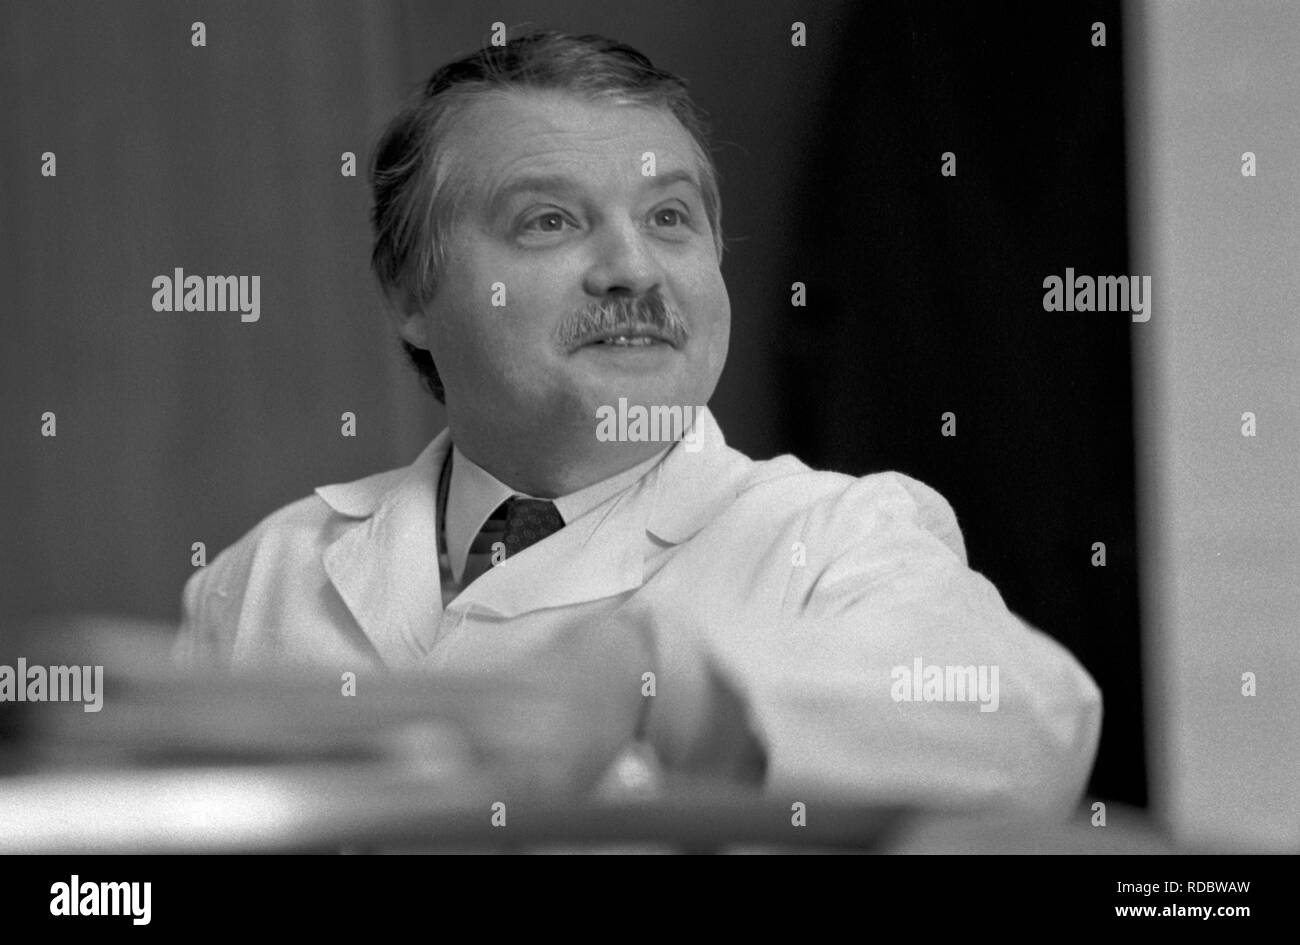 Professor Luc Montagnier Porträt am Institut Pasteur Paris, Institut Pasteur Paris, 1980er Jahre Cure HIV AIDS France. 1985 HOMER SYKES Stockfoto